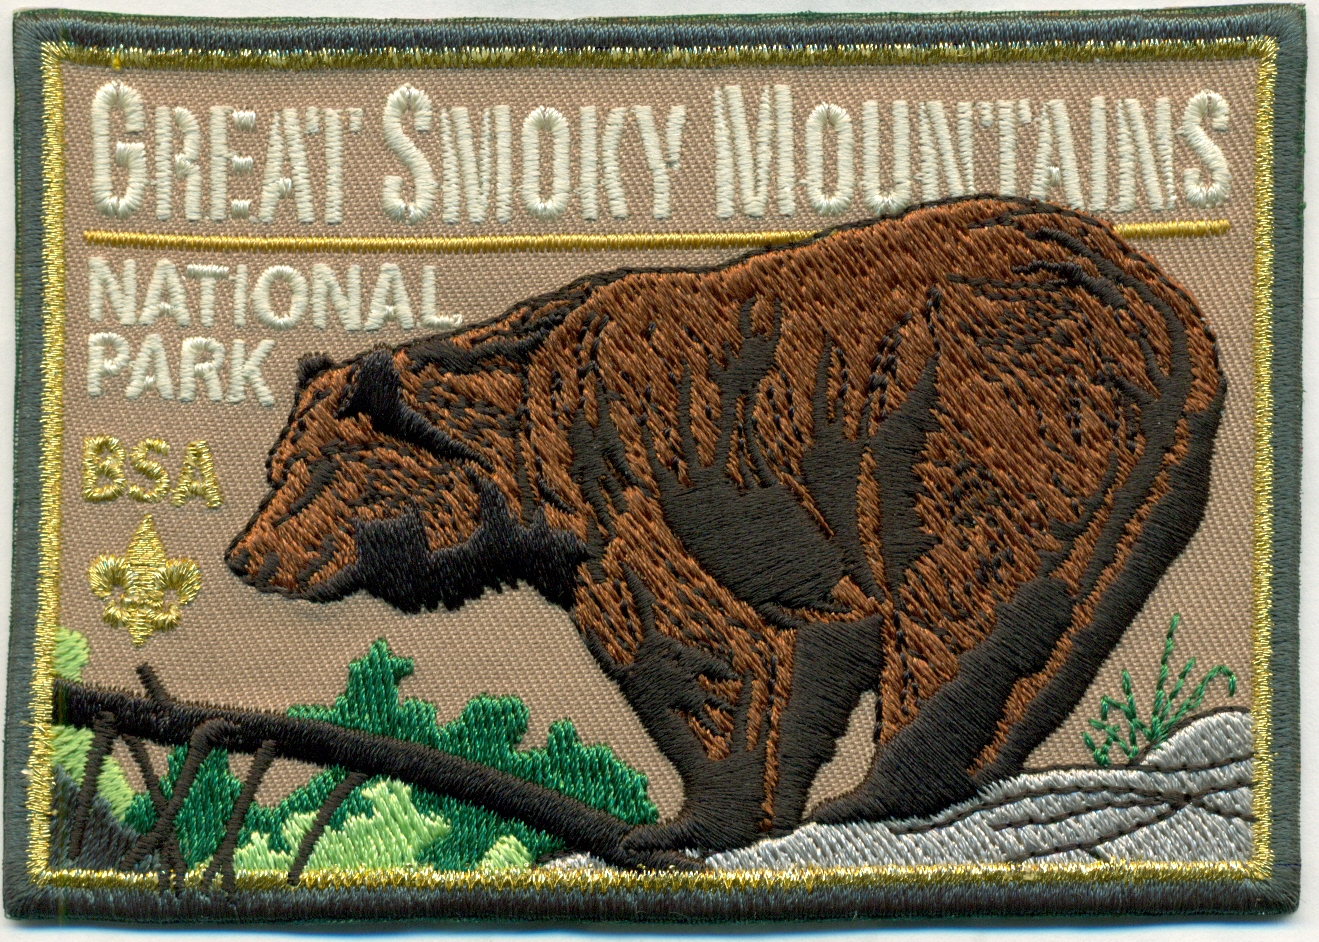 Great Smoky Mountains National Park emblem image